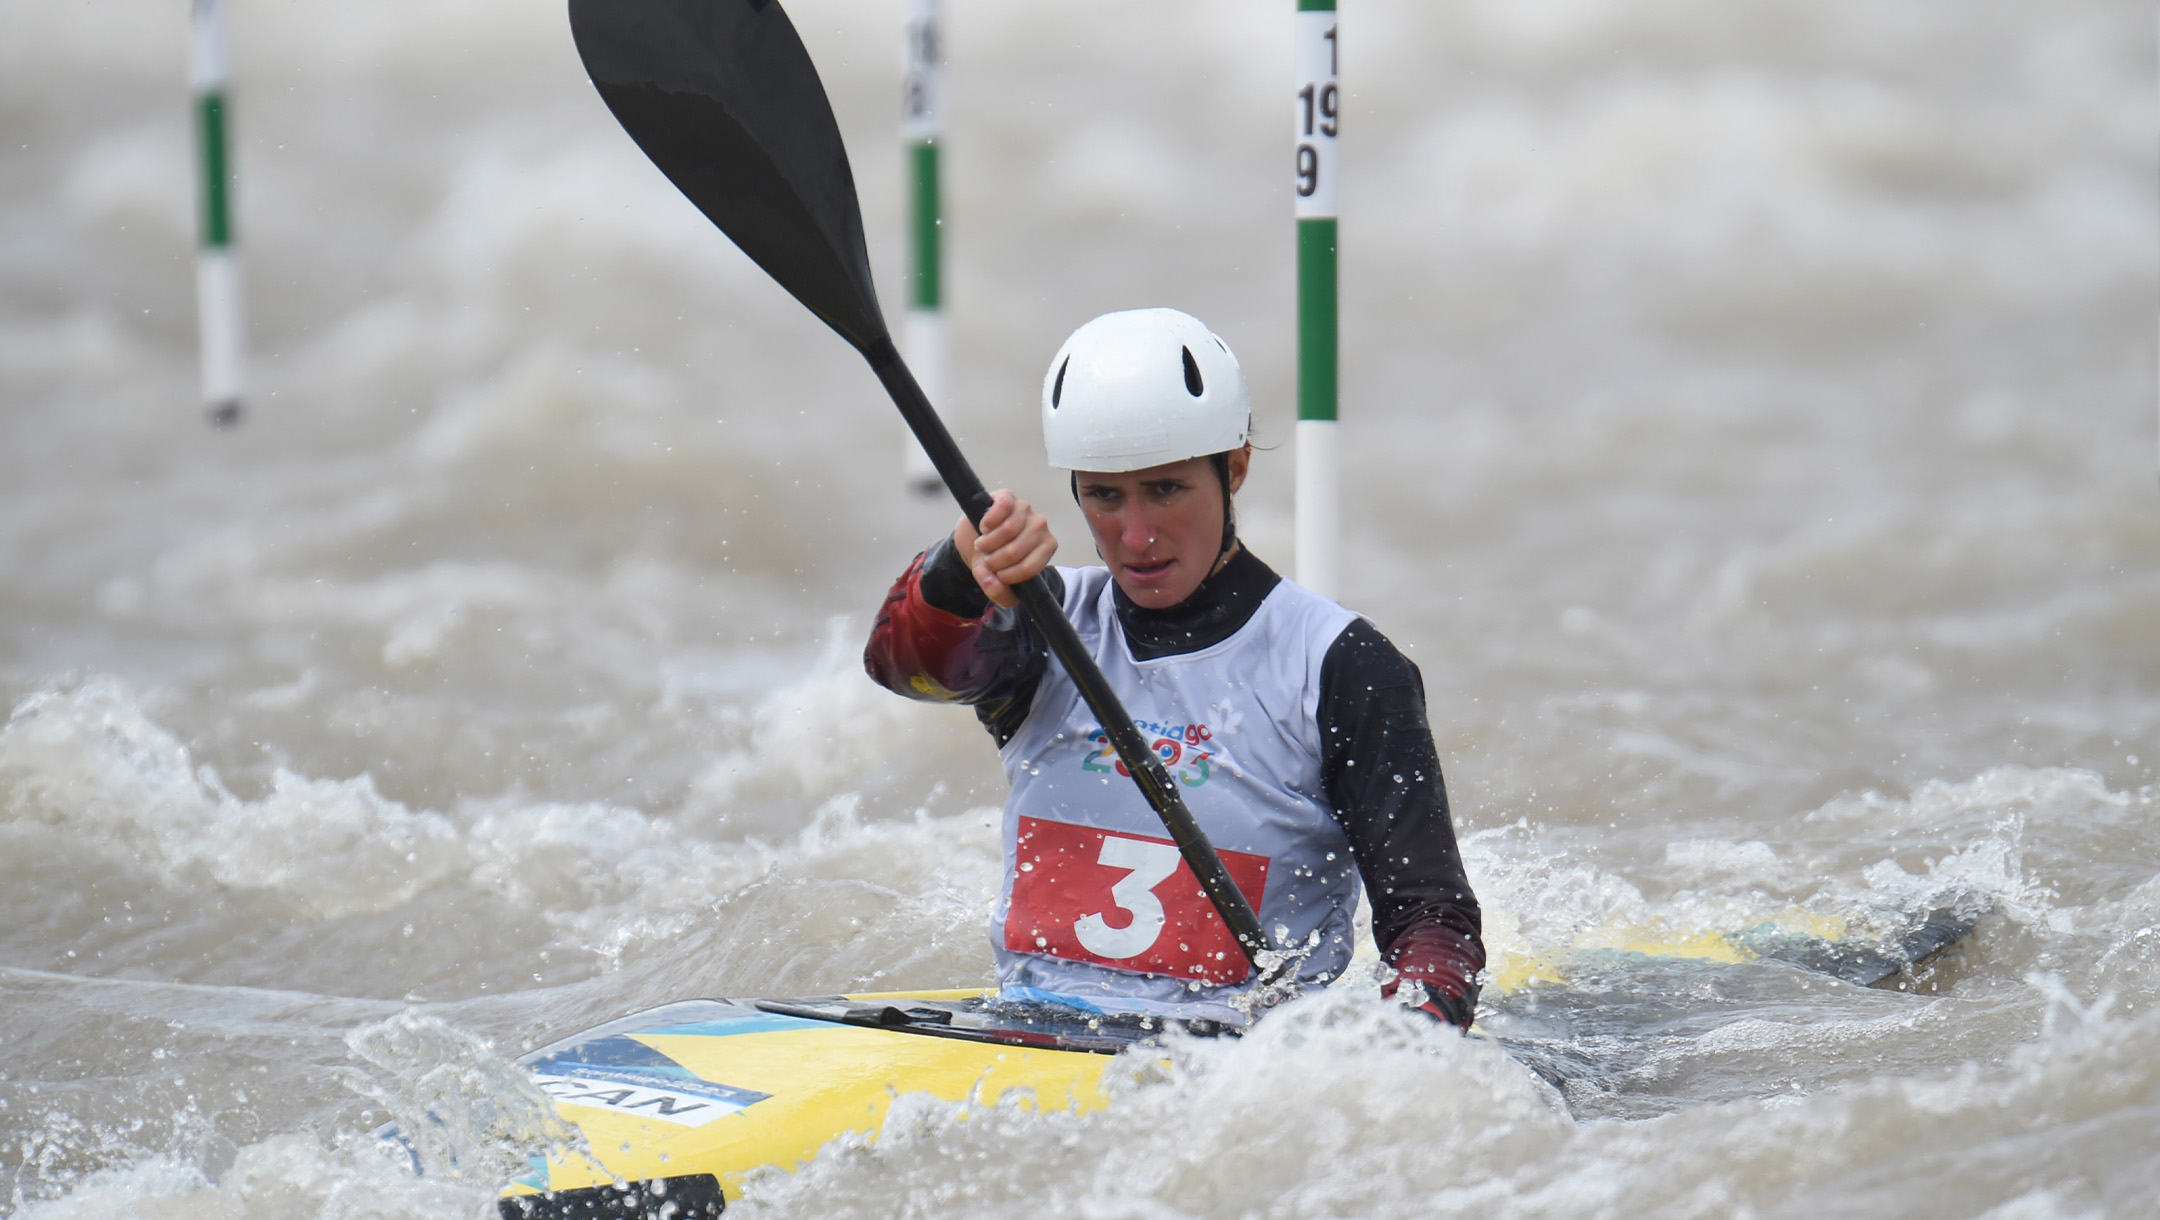 Lea Baldoni paddles her kayak past green and white striped gates